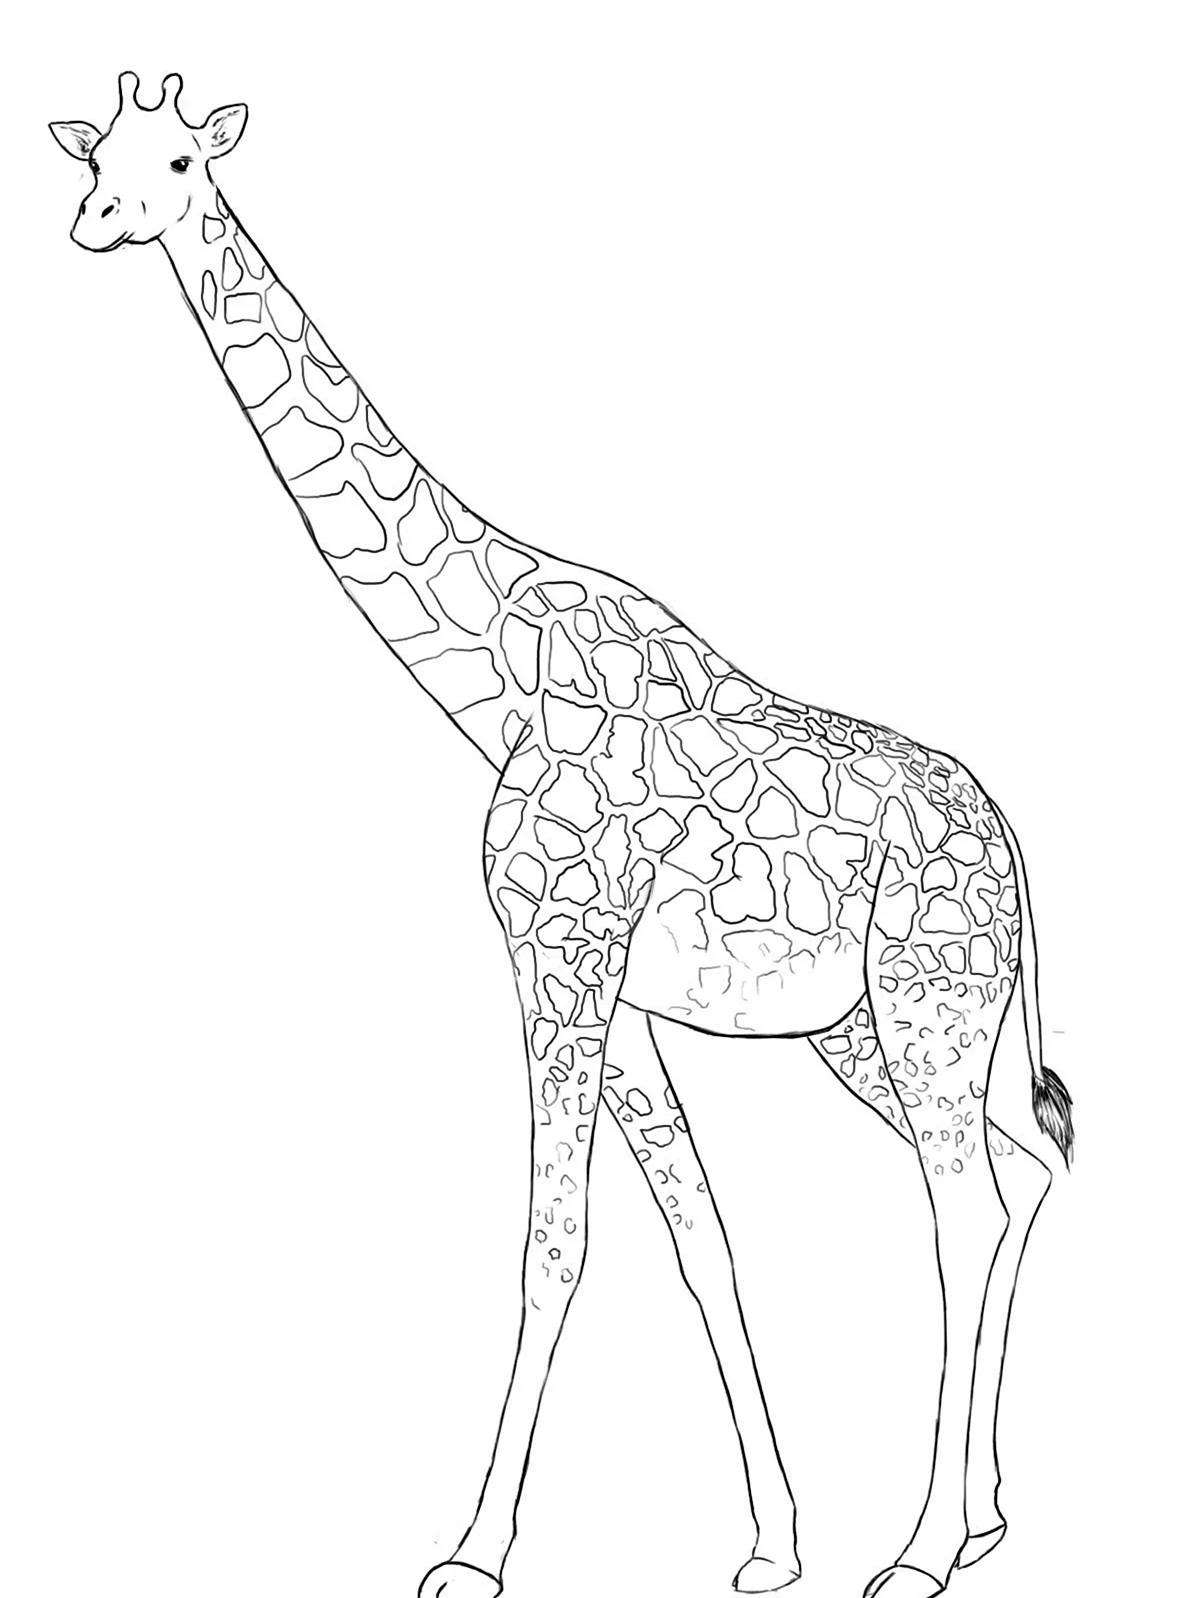 Рисунок жирафа. Для срисовки